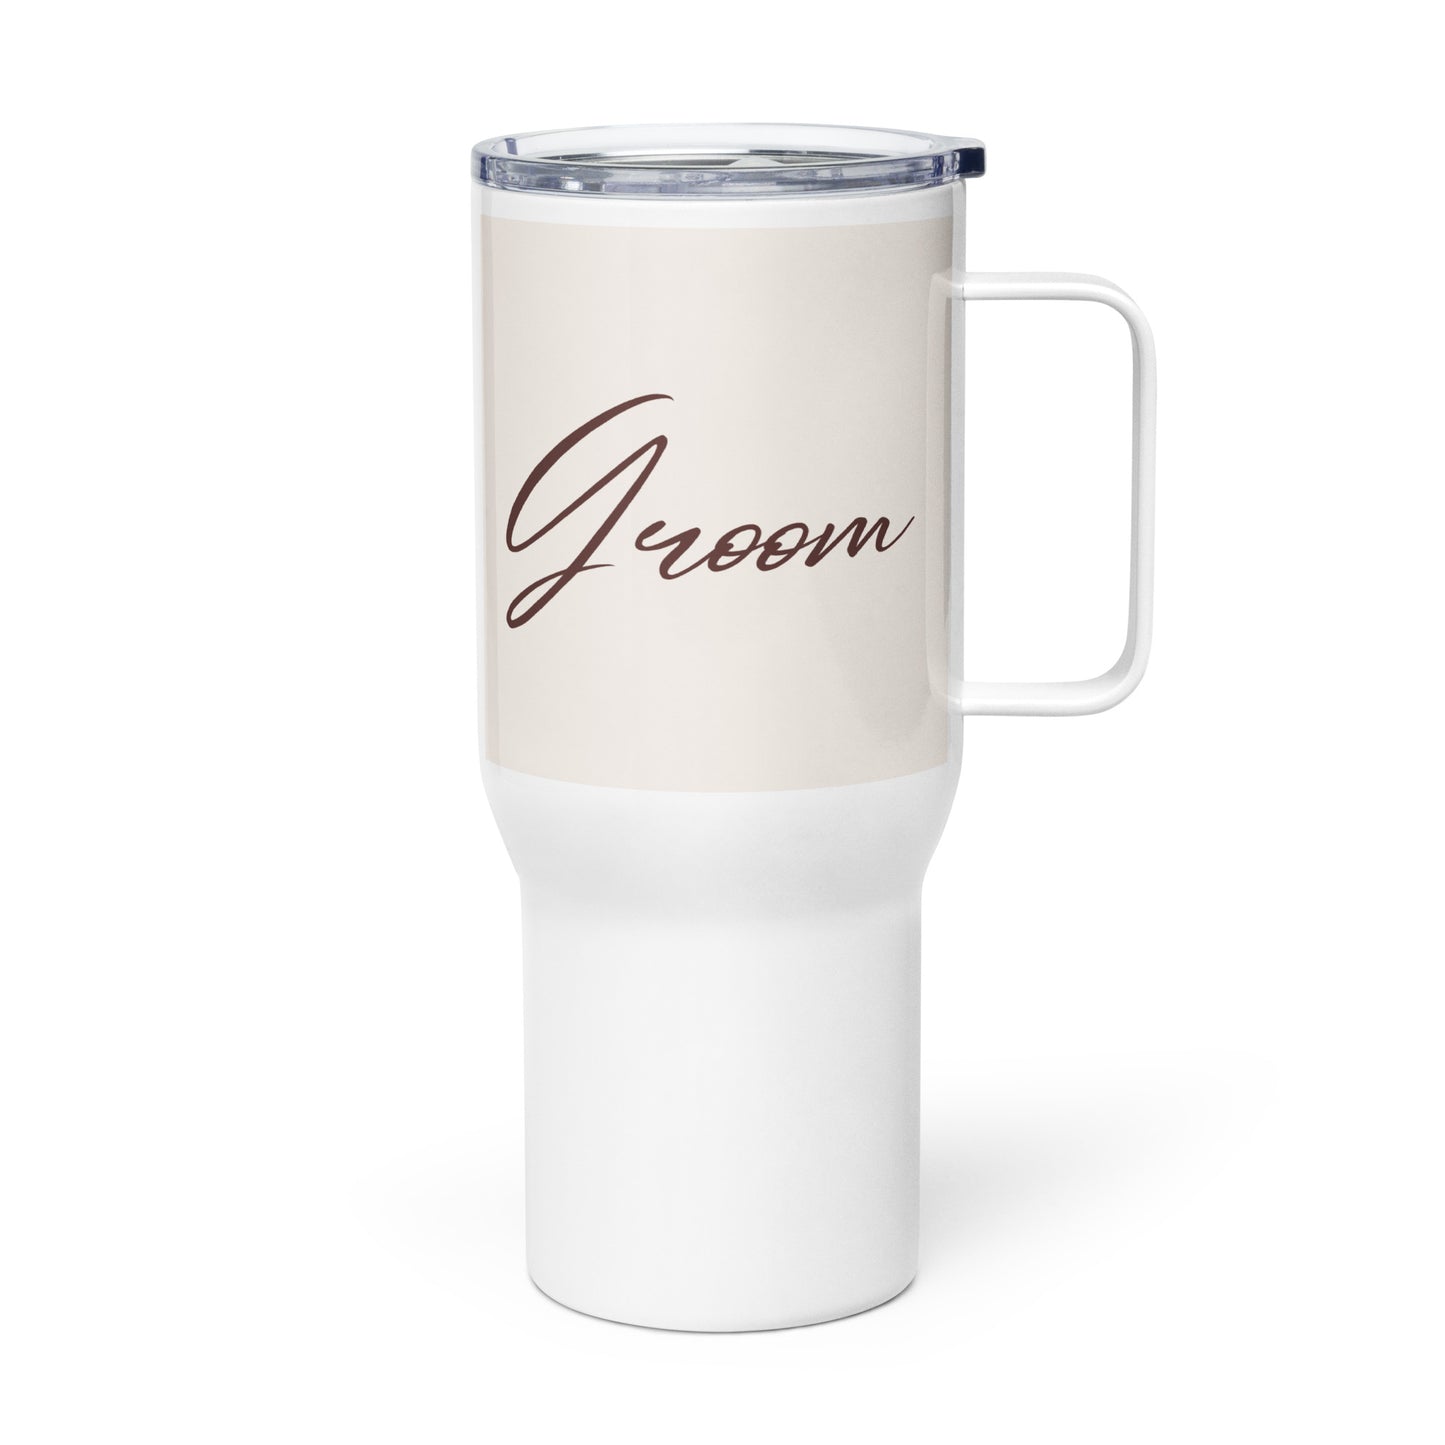 Groom Travel mug with a handle